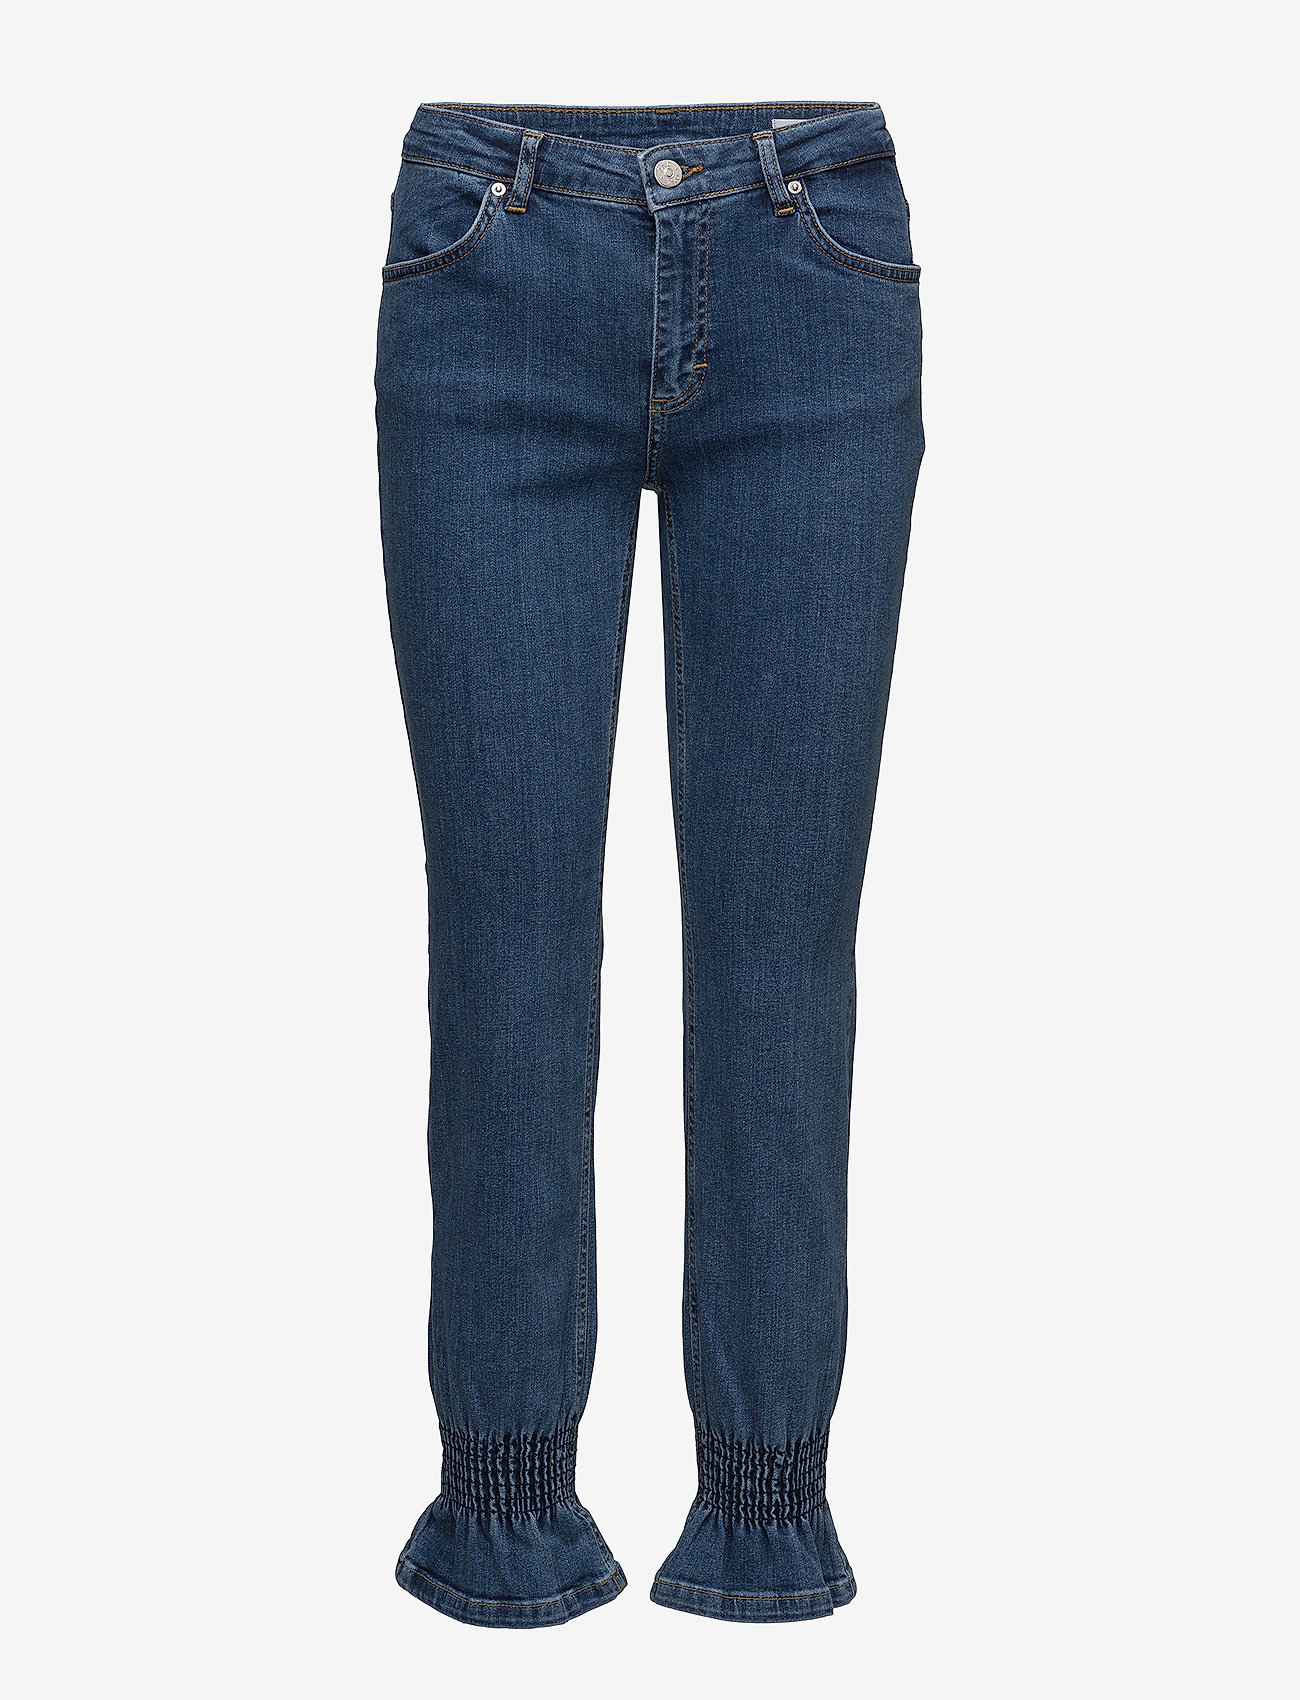 2nd One - Nicole 829 Crop, Blue Clarity Smock, Jeans - džinsa bikses ar tievām starām - blue clarity smock - 0